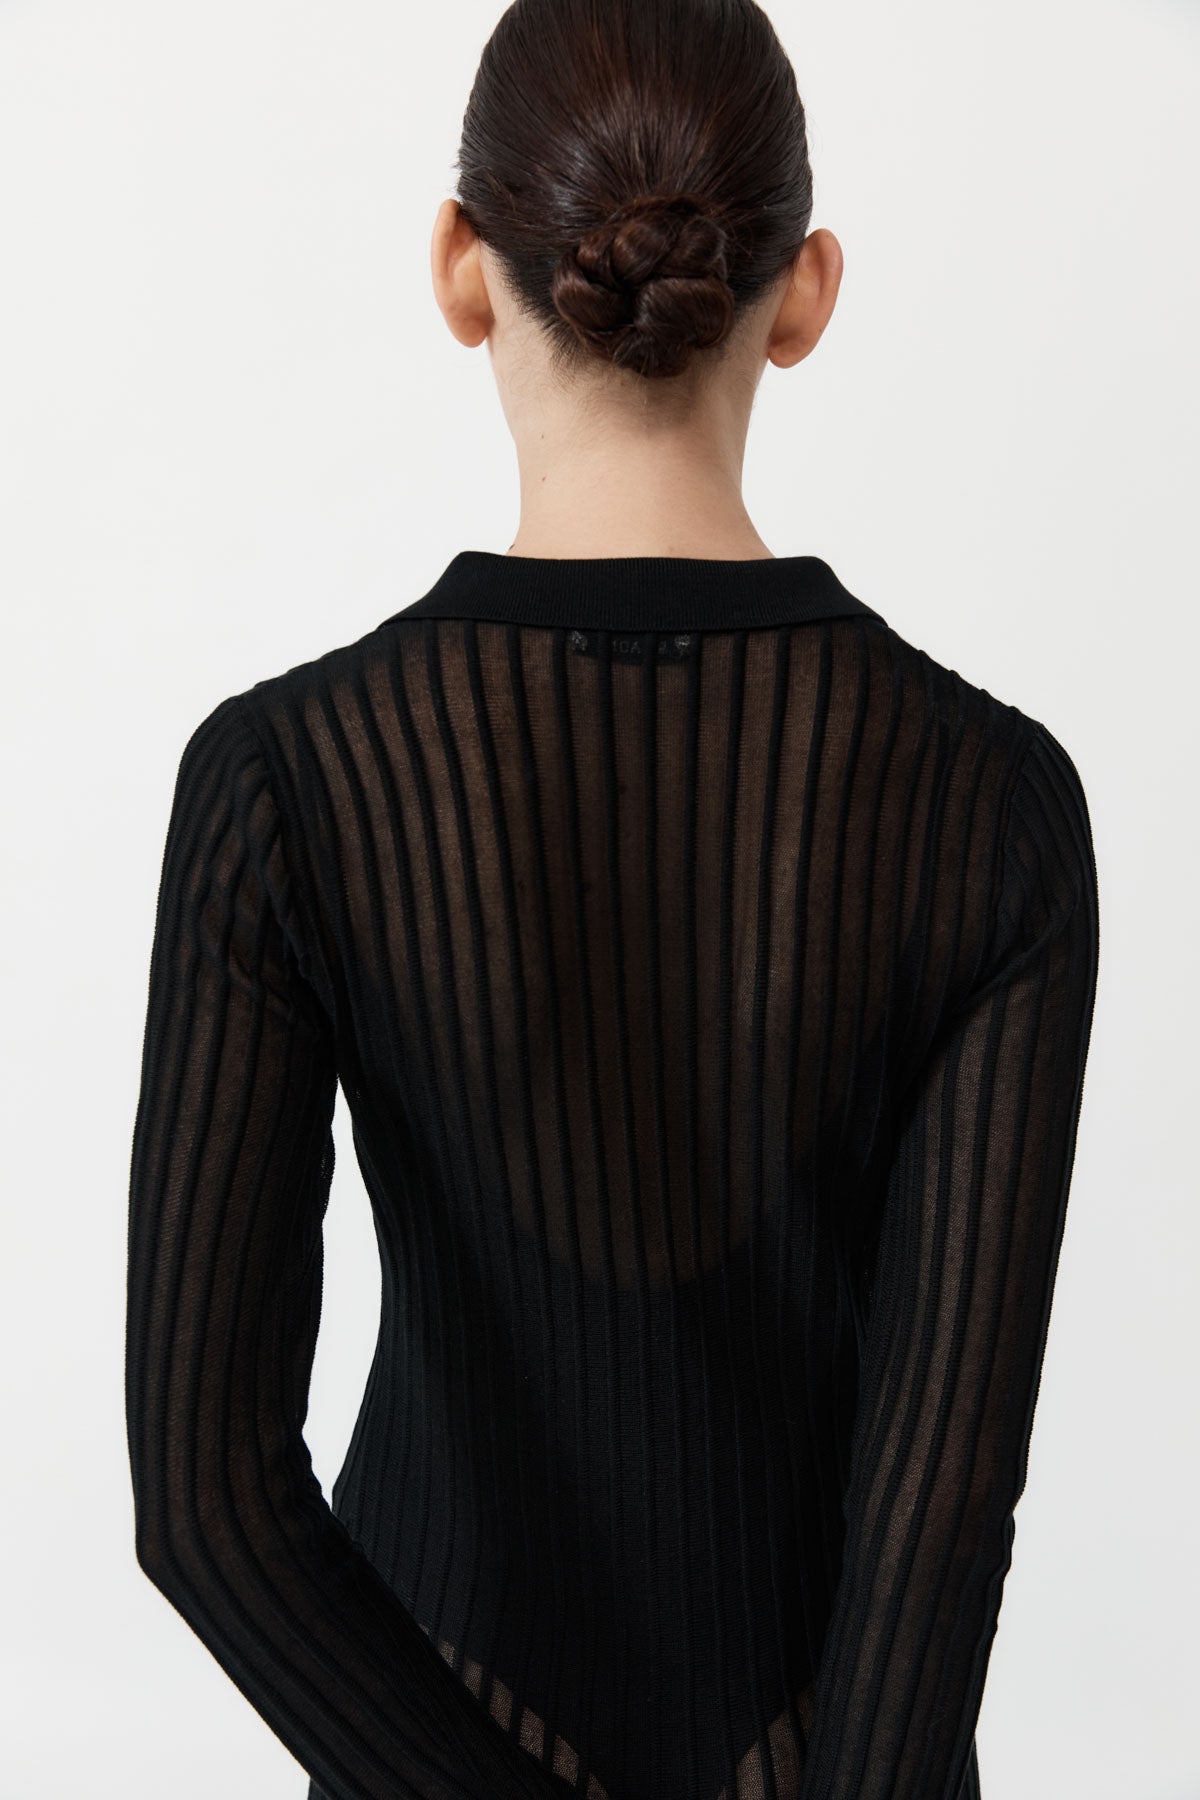 Sheer Stripe Dress - Black